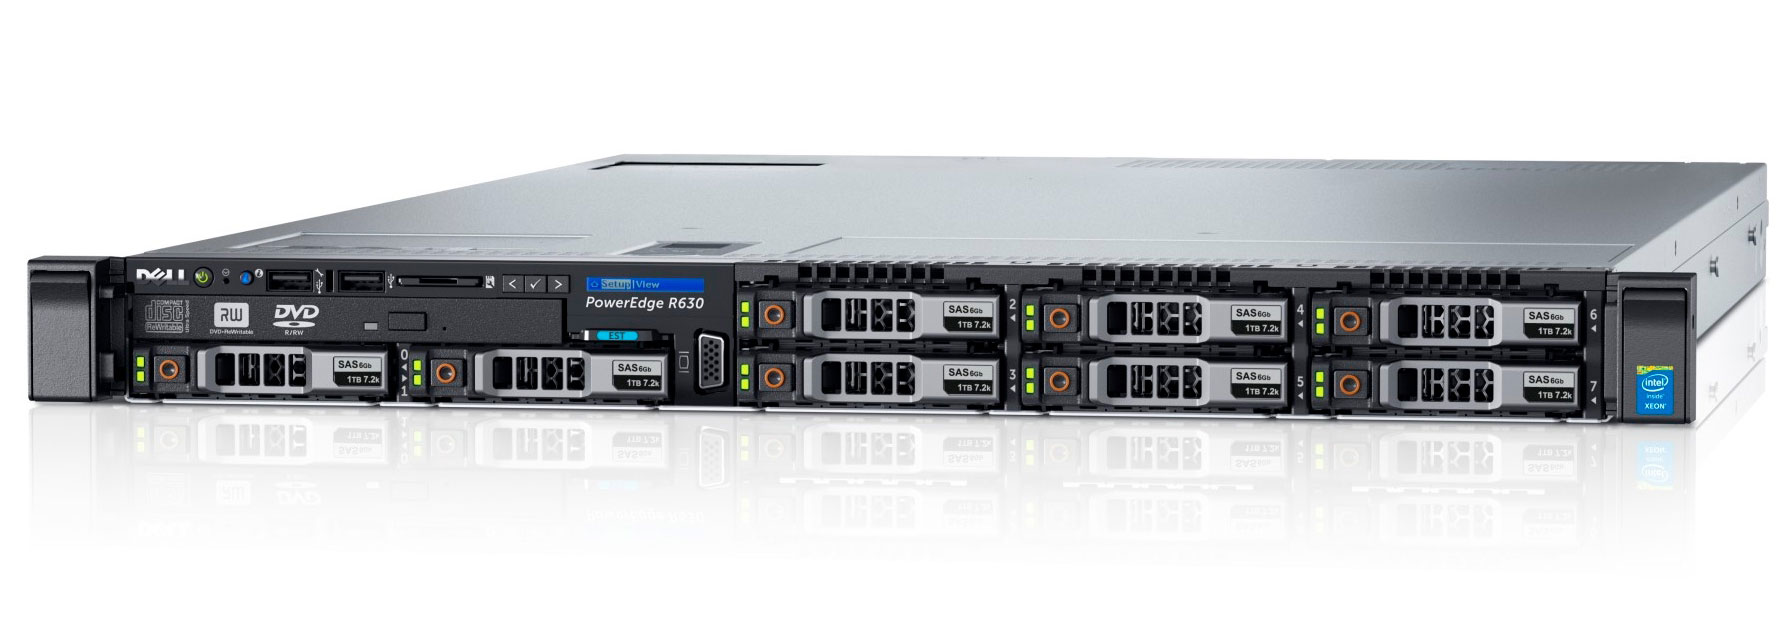 Подробное фото Сервер DELL PowerEdge R630 Xeon 2x E5-2683v4 192Gb DDR4 2133P 8x noHDD 2.5", SAS RAID Perc H730 mini, 1024Mb, DVD, 2*PSU